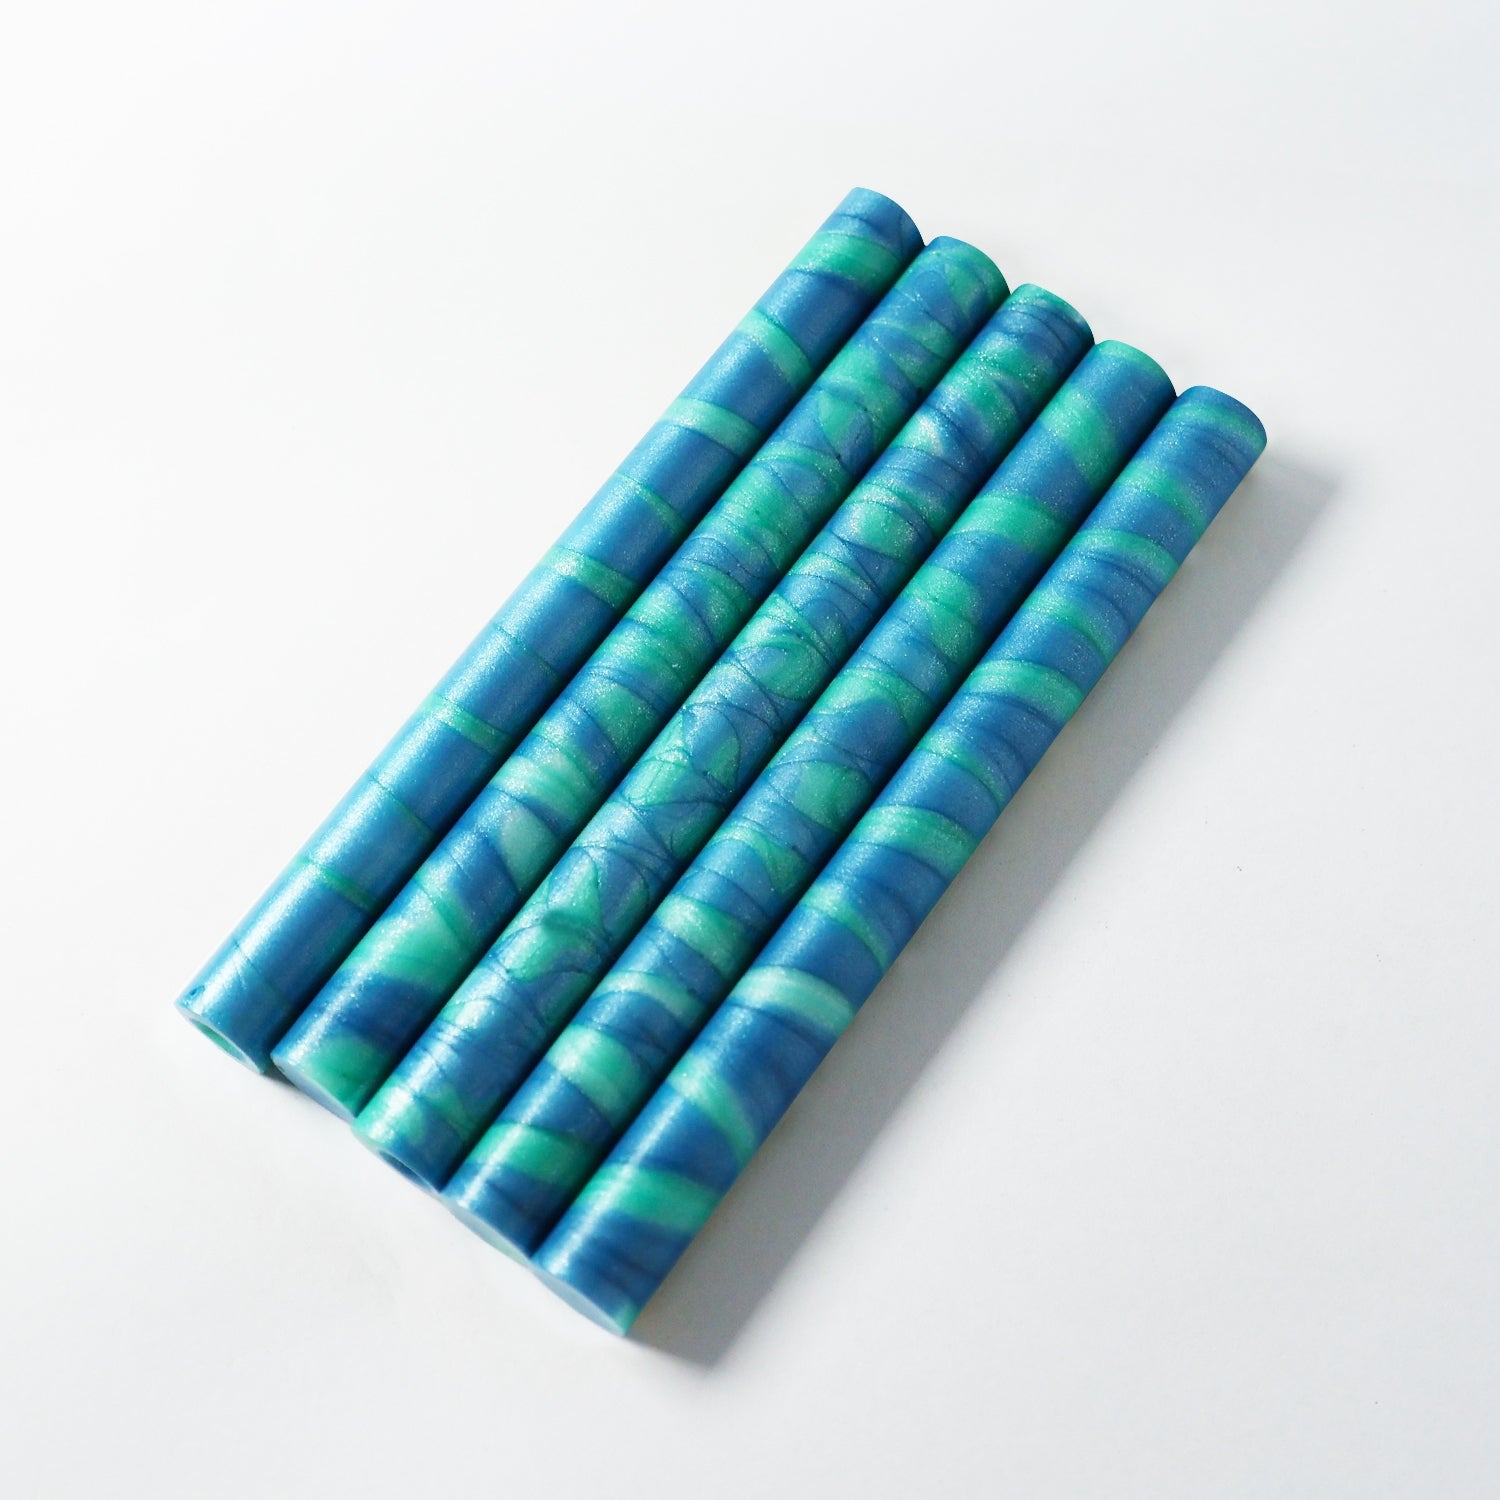 Dreamy Mixed Color Glue Gun Sealing Wax Stick - Green Blue